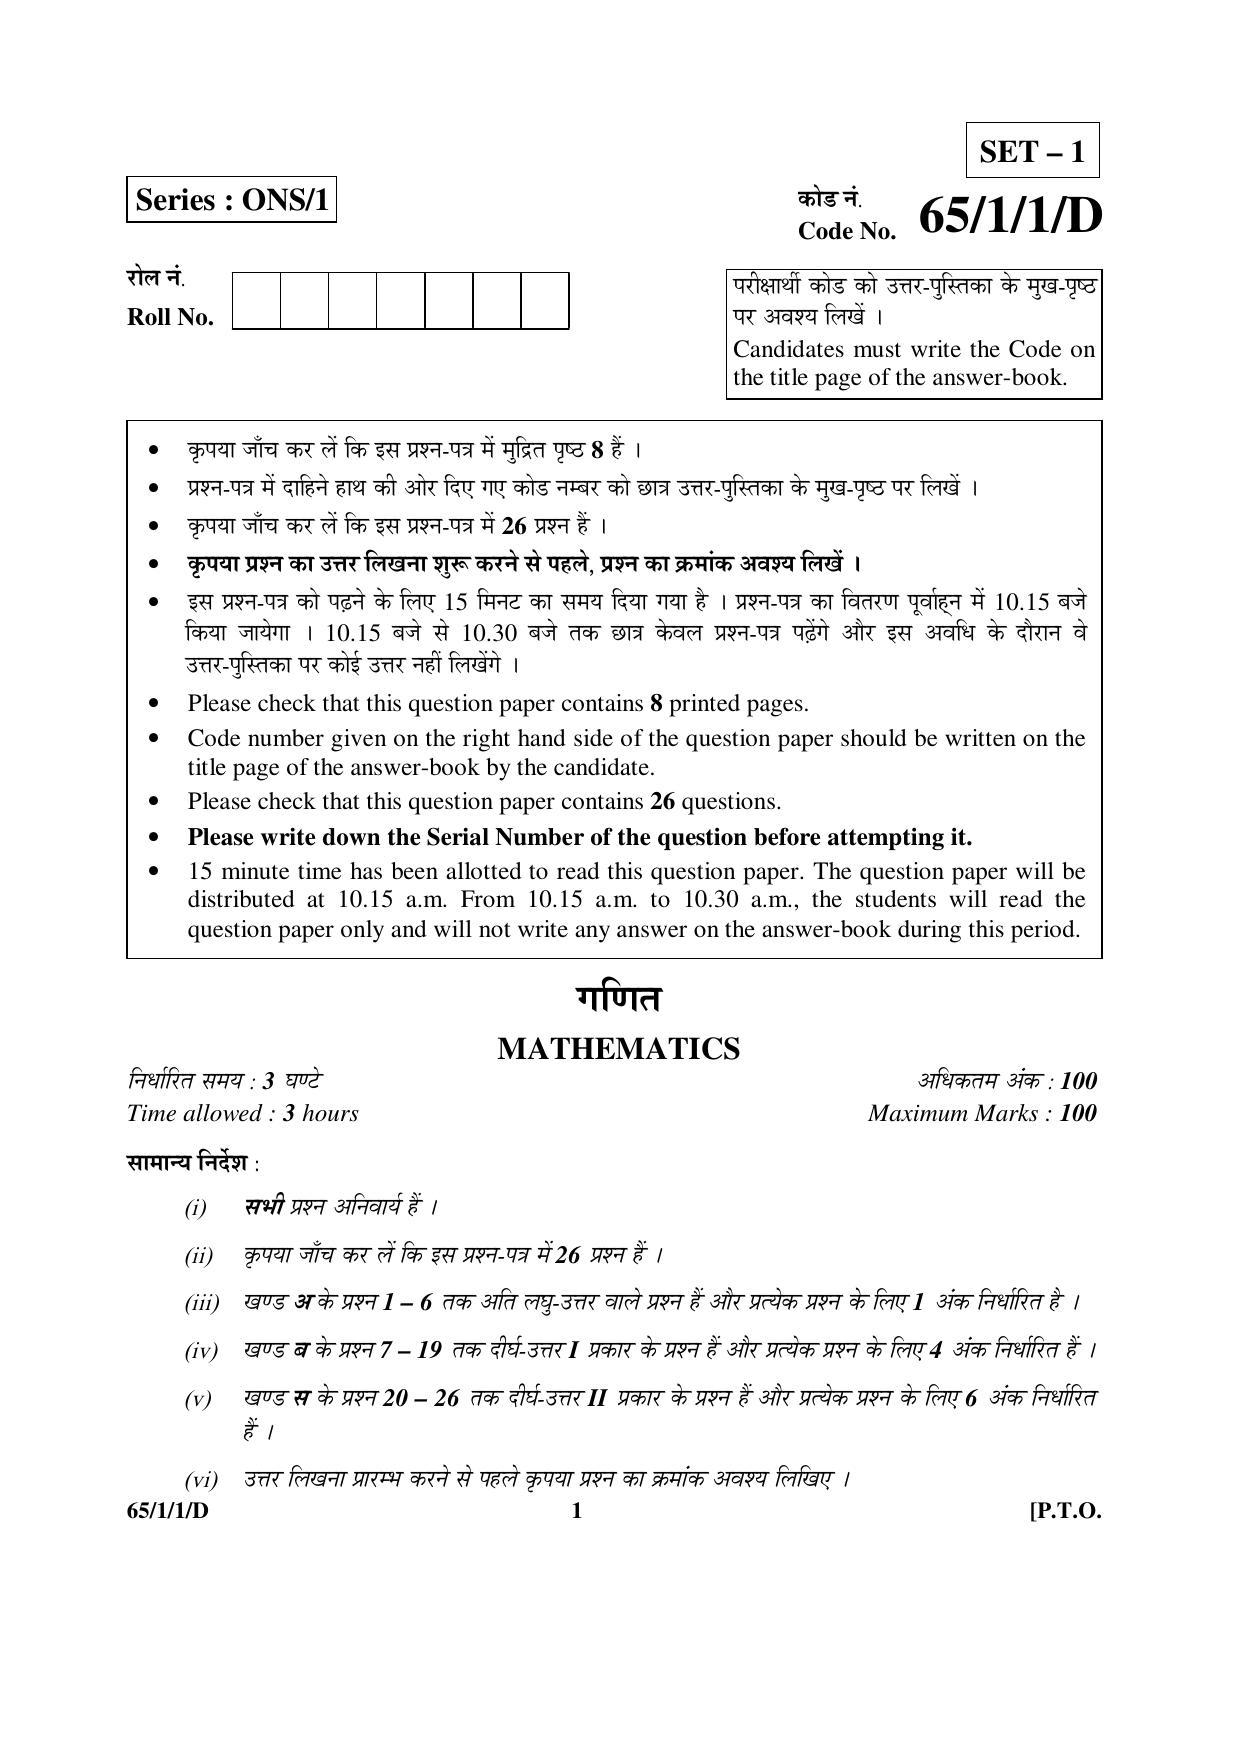 CBSE Class 12 65-1-1-D MATHEMATICS 2016 Question Paper - Page 1